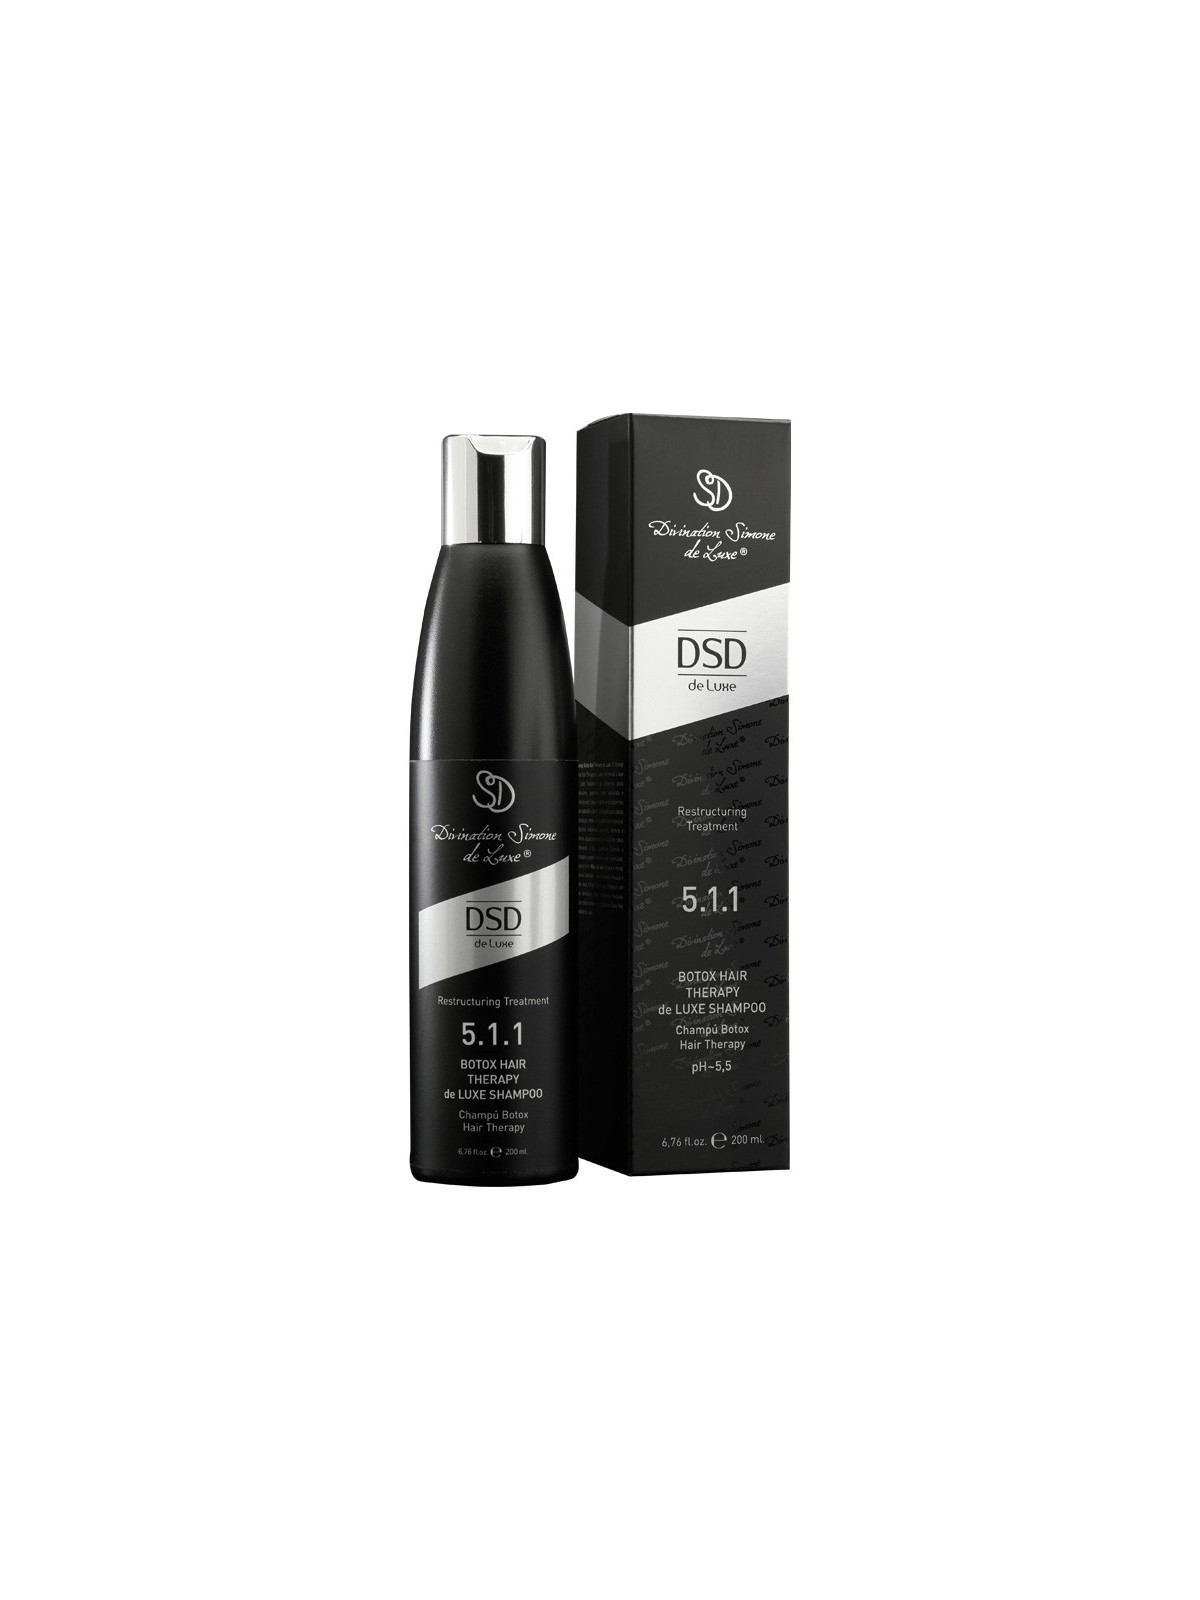 Plaukų šampūnas su botoksu DSD DELUXE Botox Hair Therapy de Luxe Shampoo 5.1.1 200ml